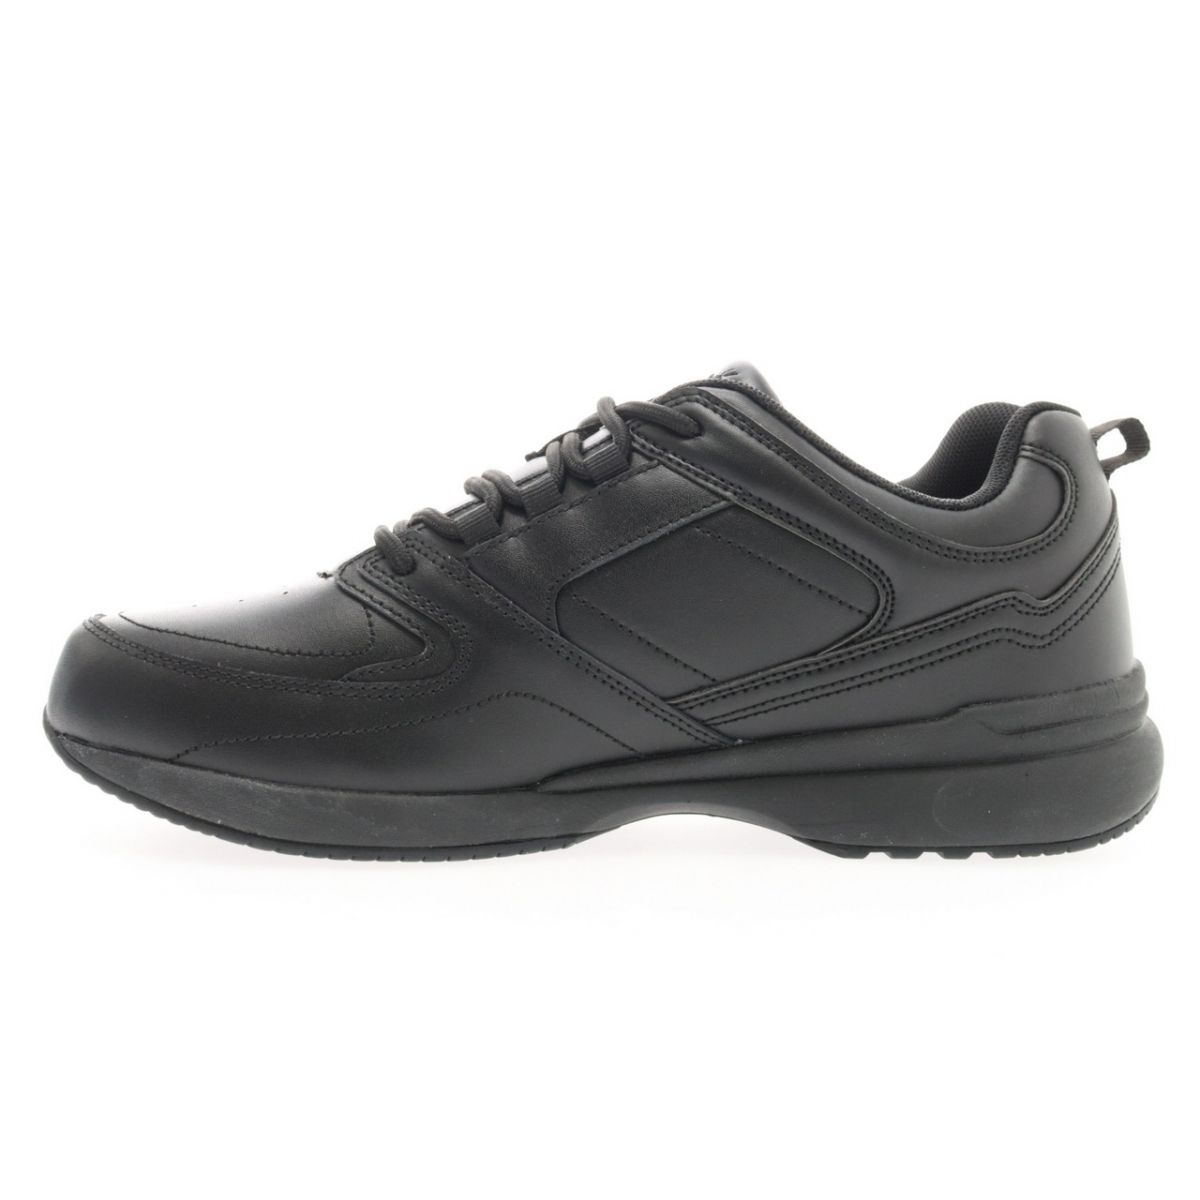 Propet Men's Life Walker Sport Sneaker Black - MAA272LBLK BLACK - BLACK, 13 WIDE